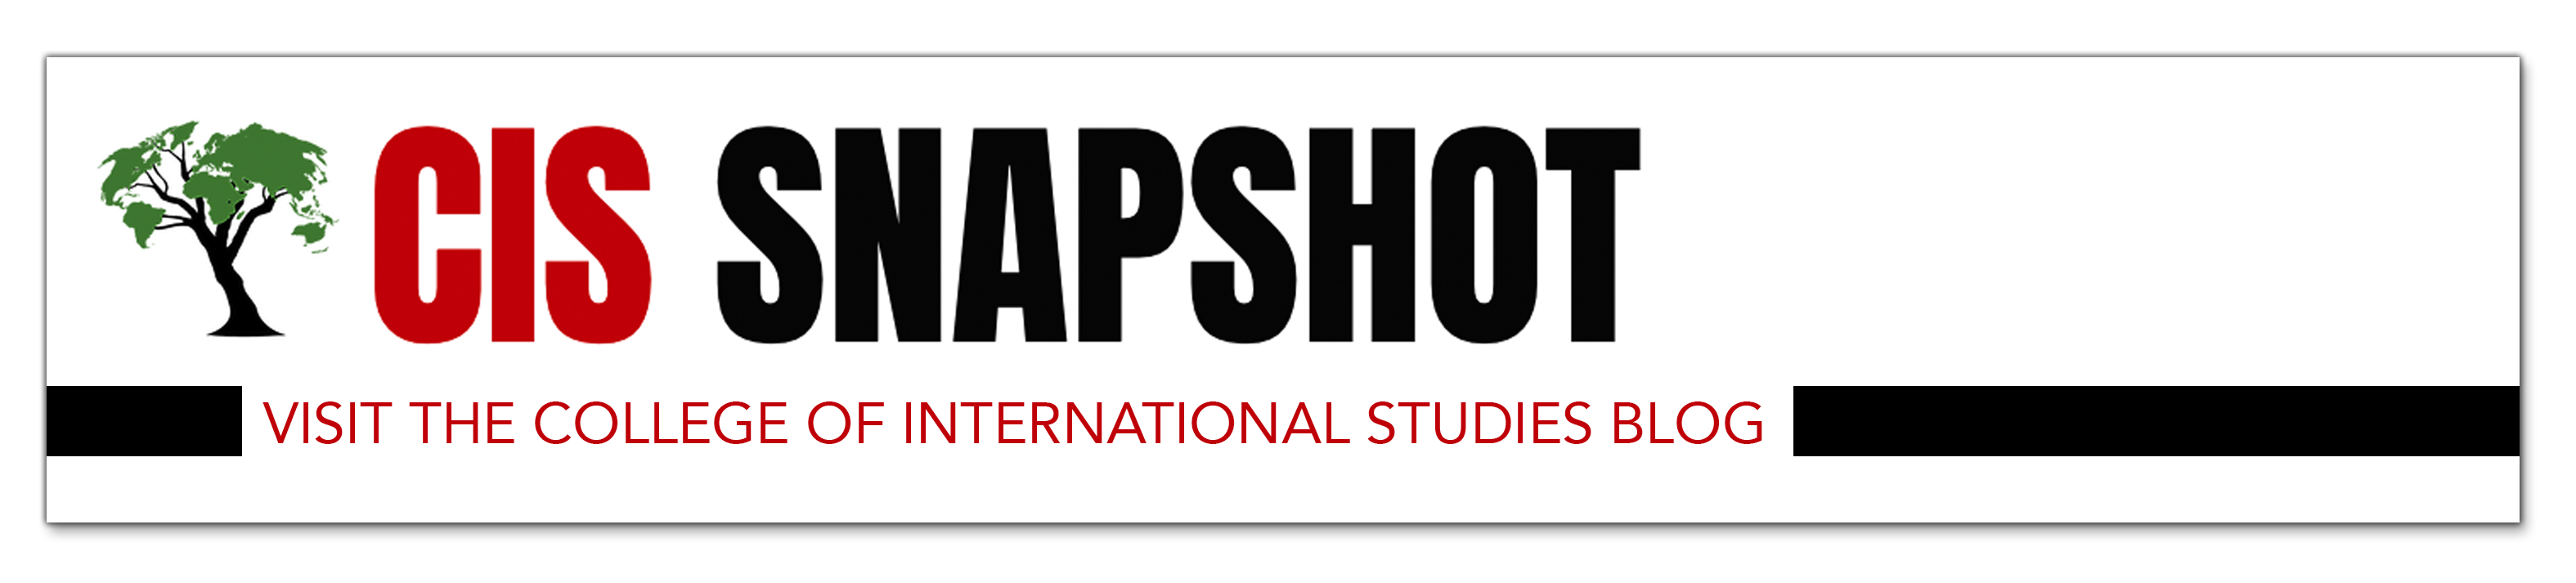 CIS Snapshot: visit the College of International Studies blog